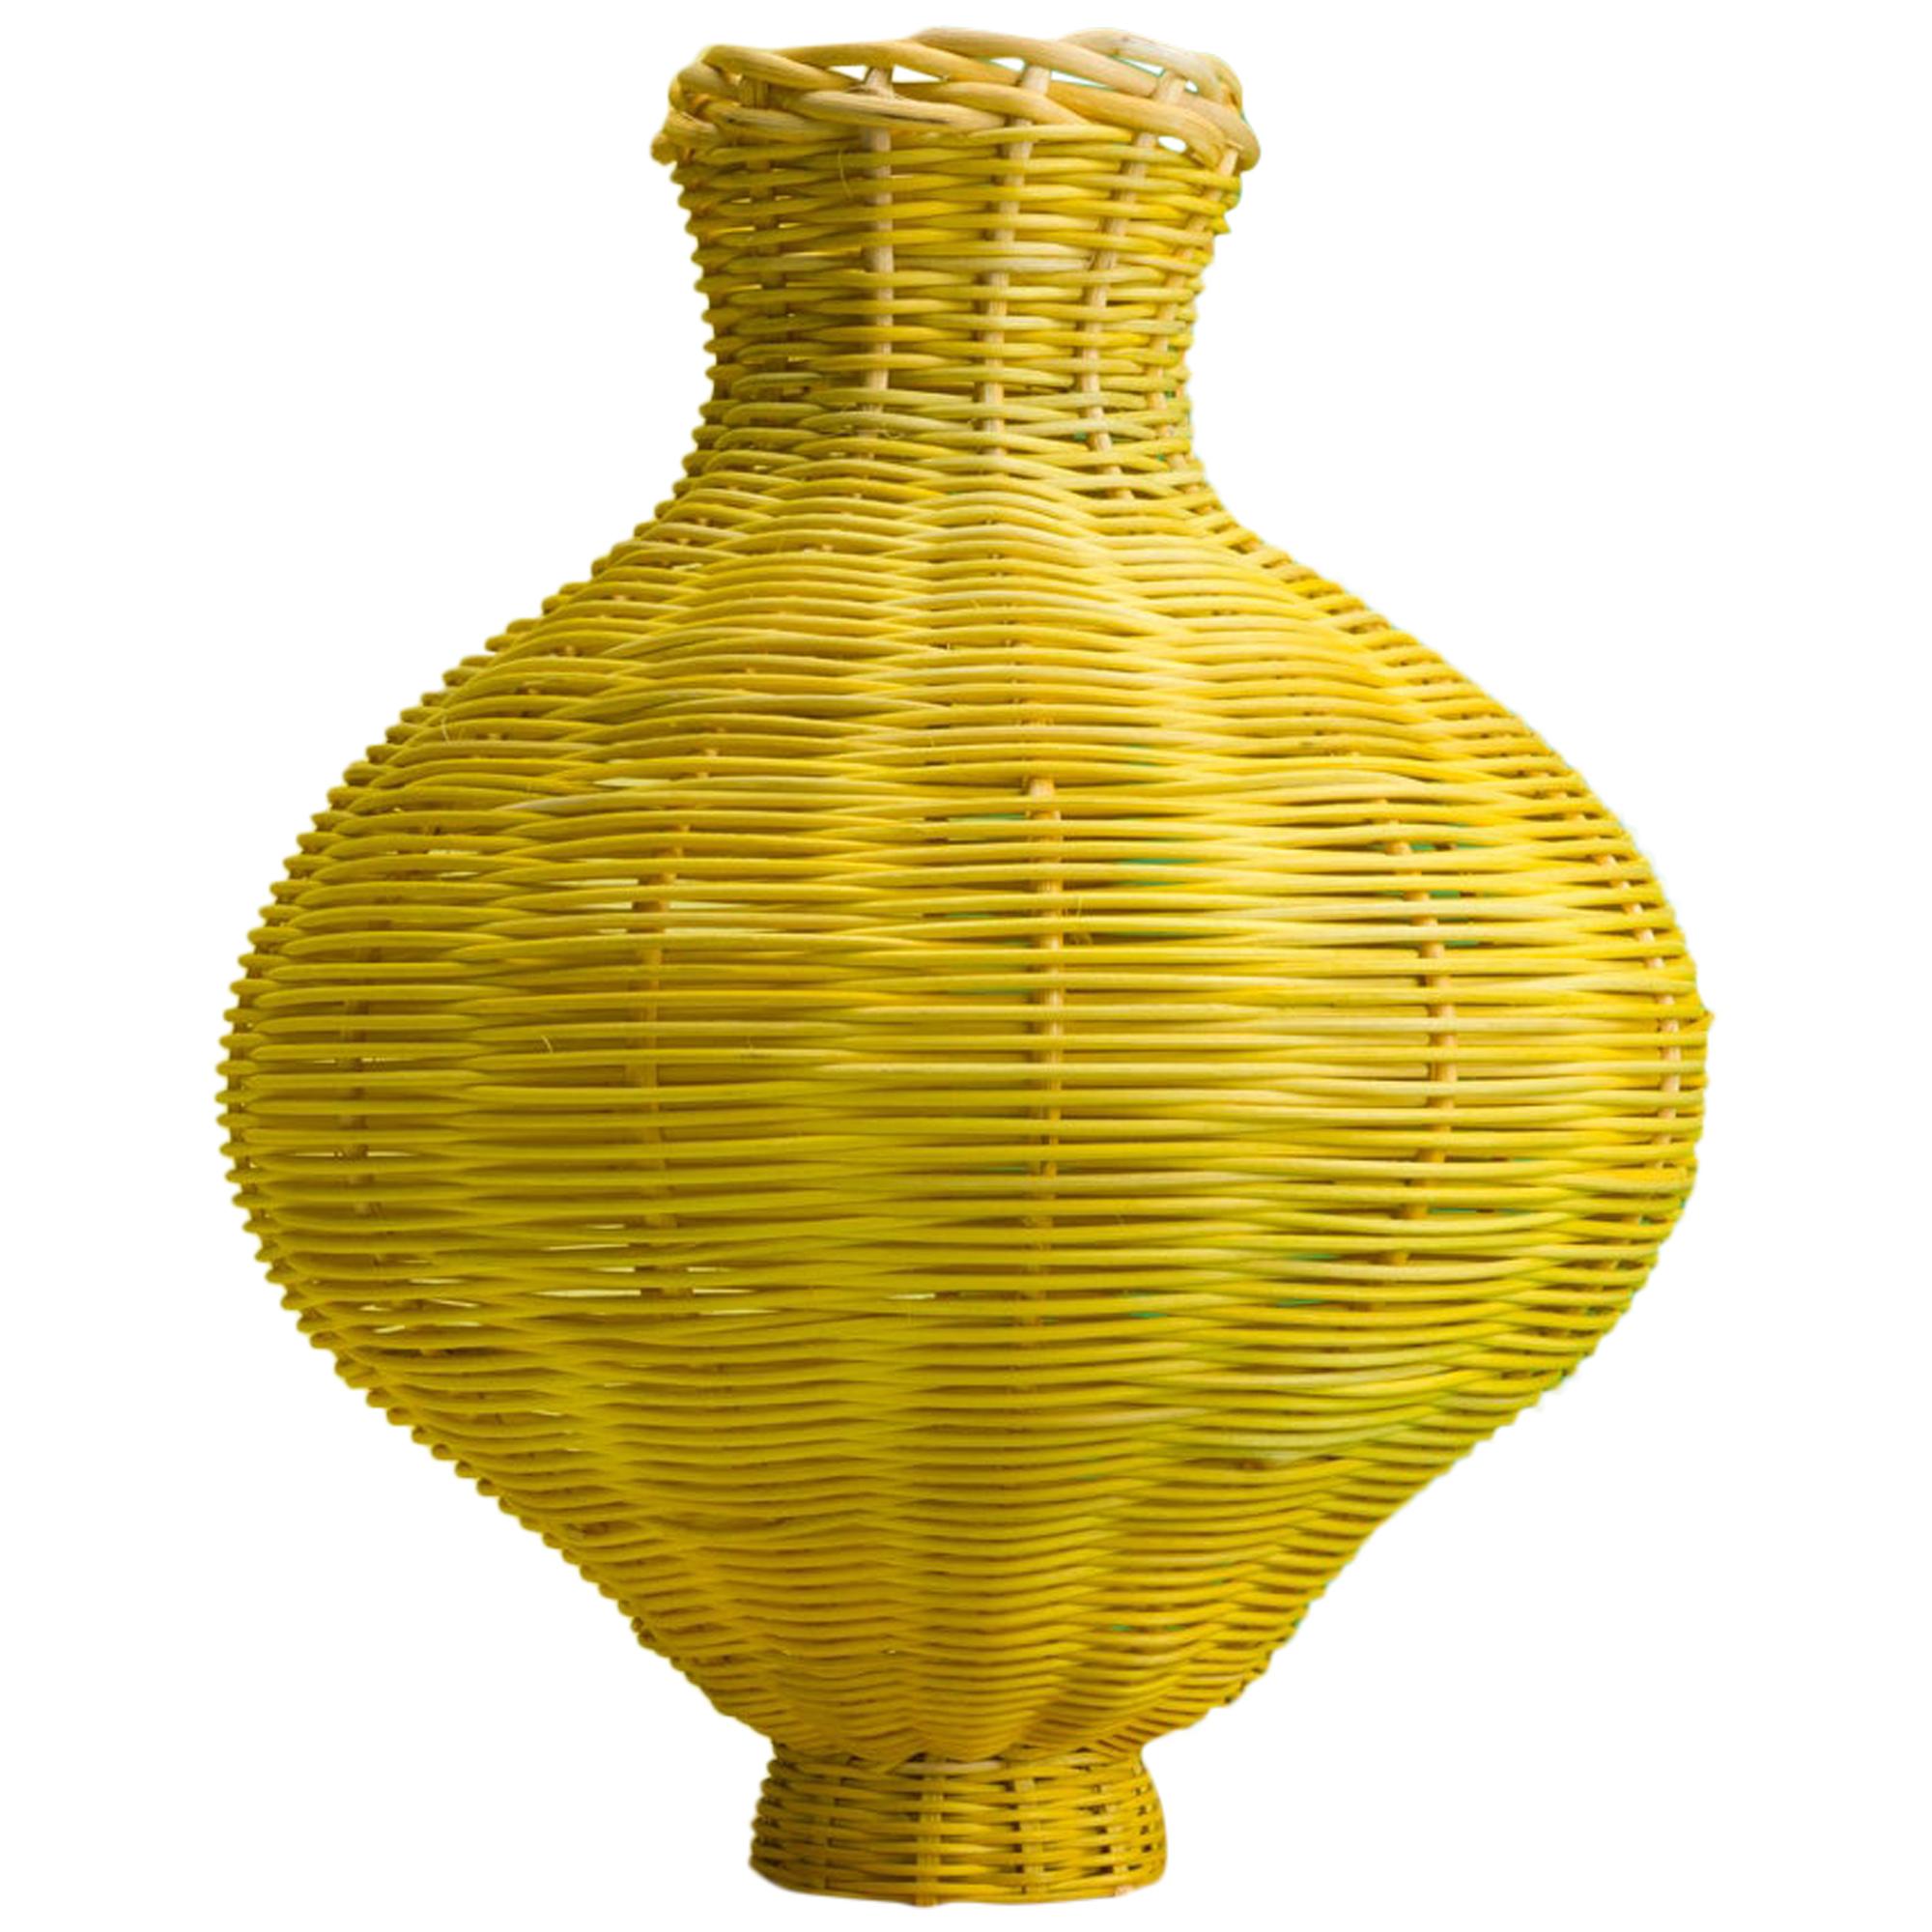 Amphora Vase Woven in Lemon by Studio Herron